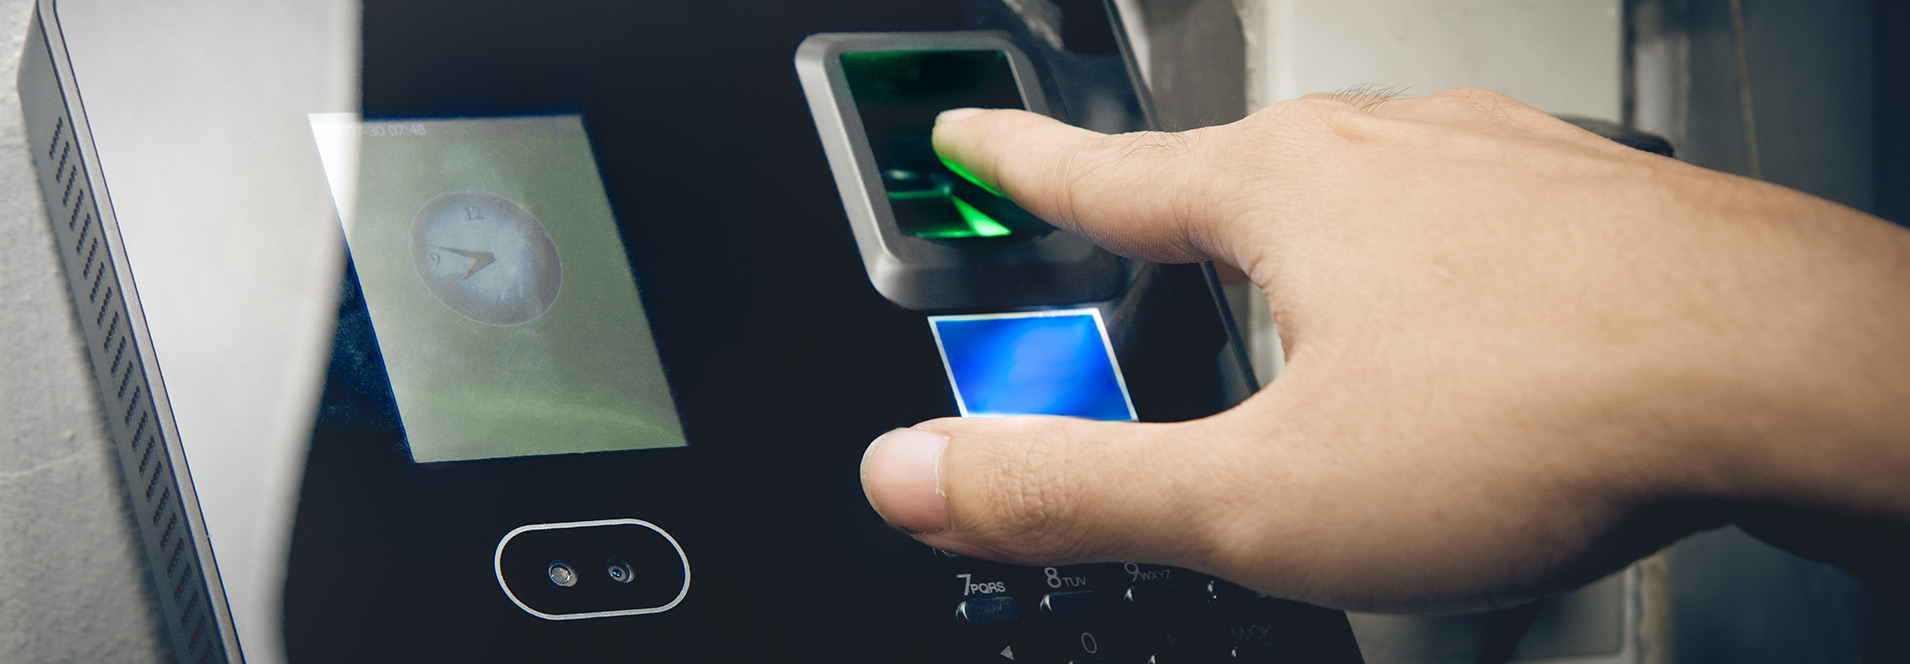 fingerprint-Access-Control-system